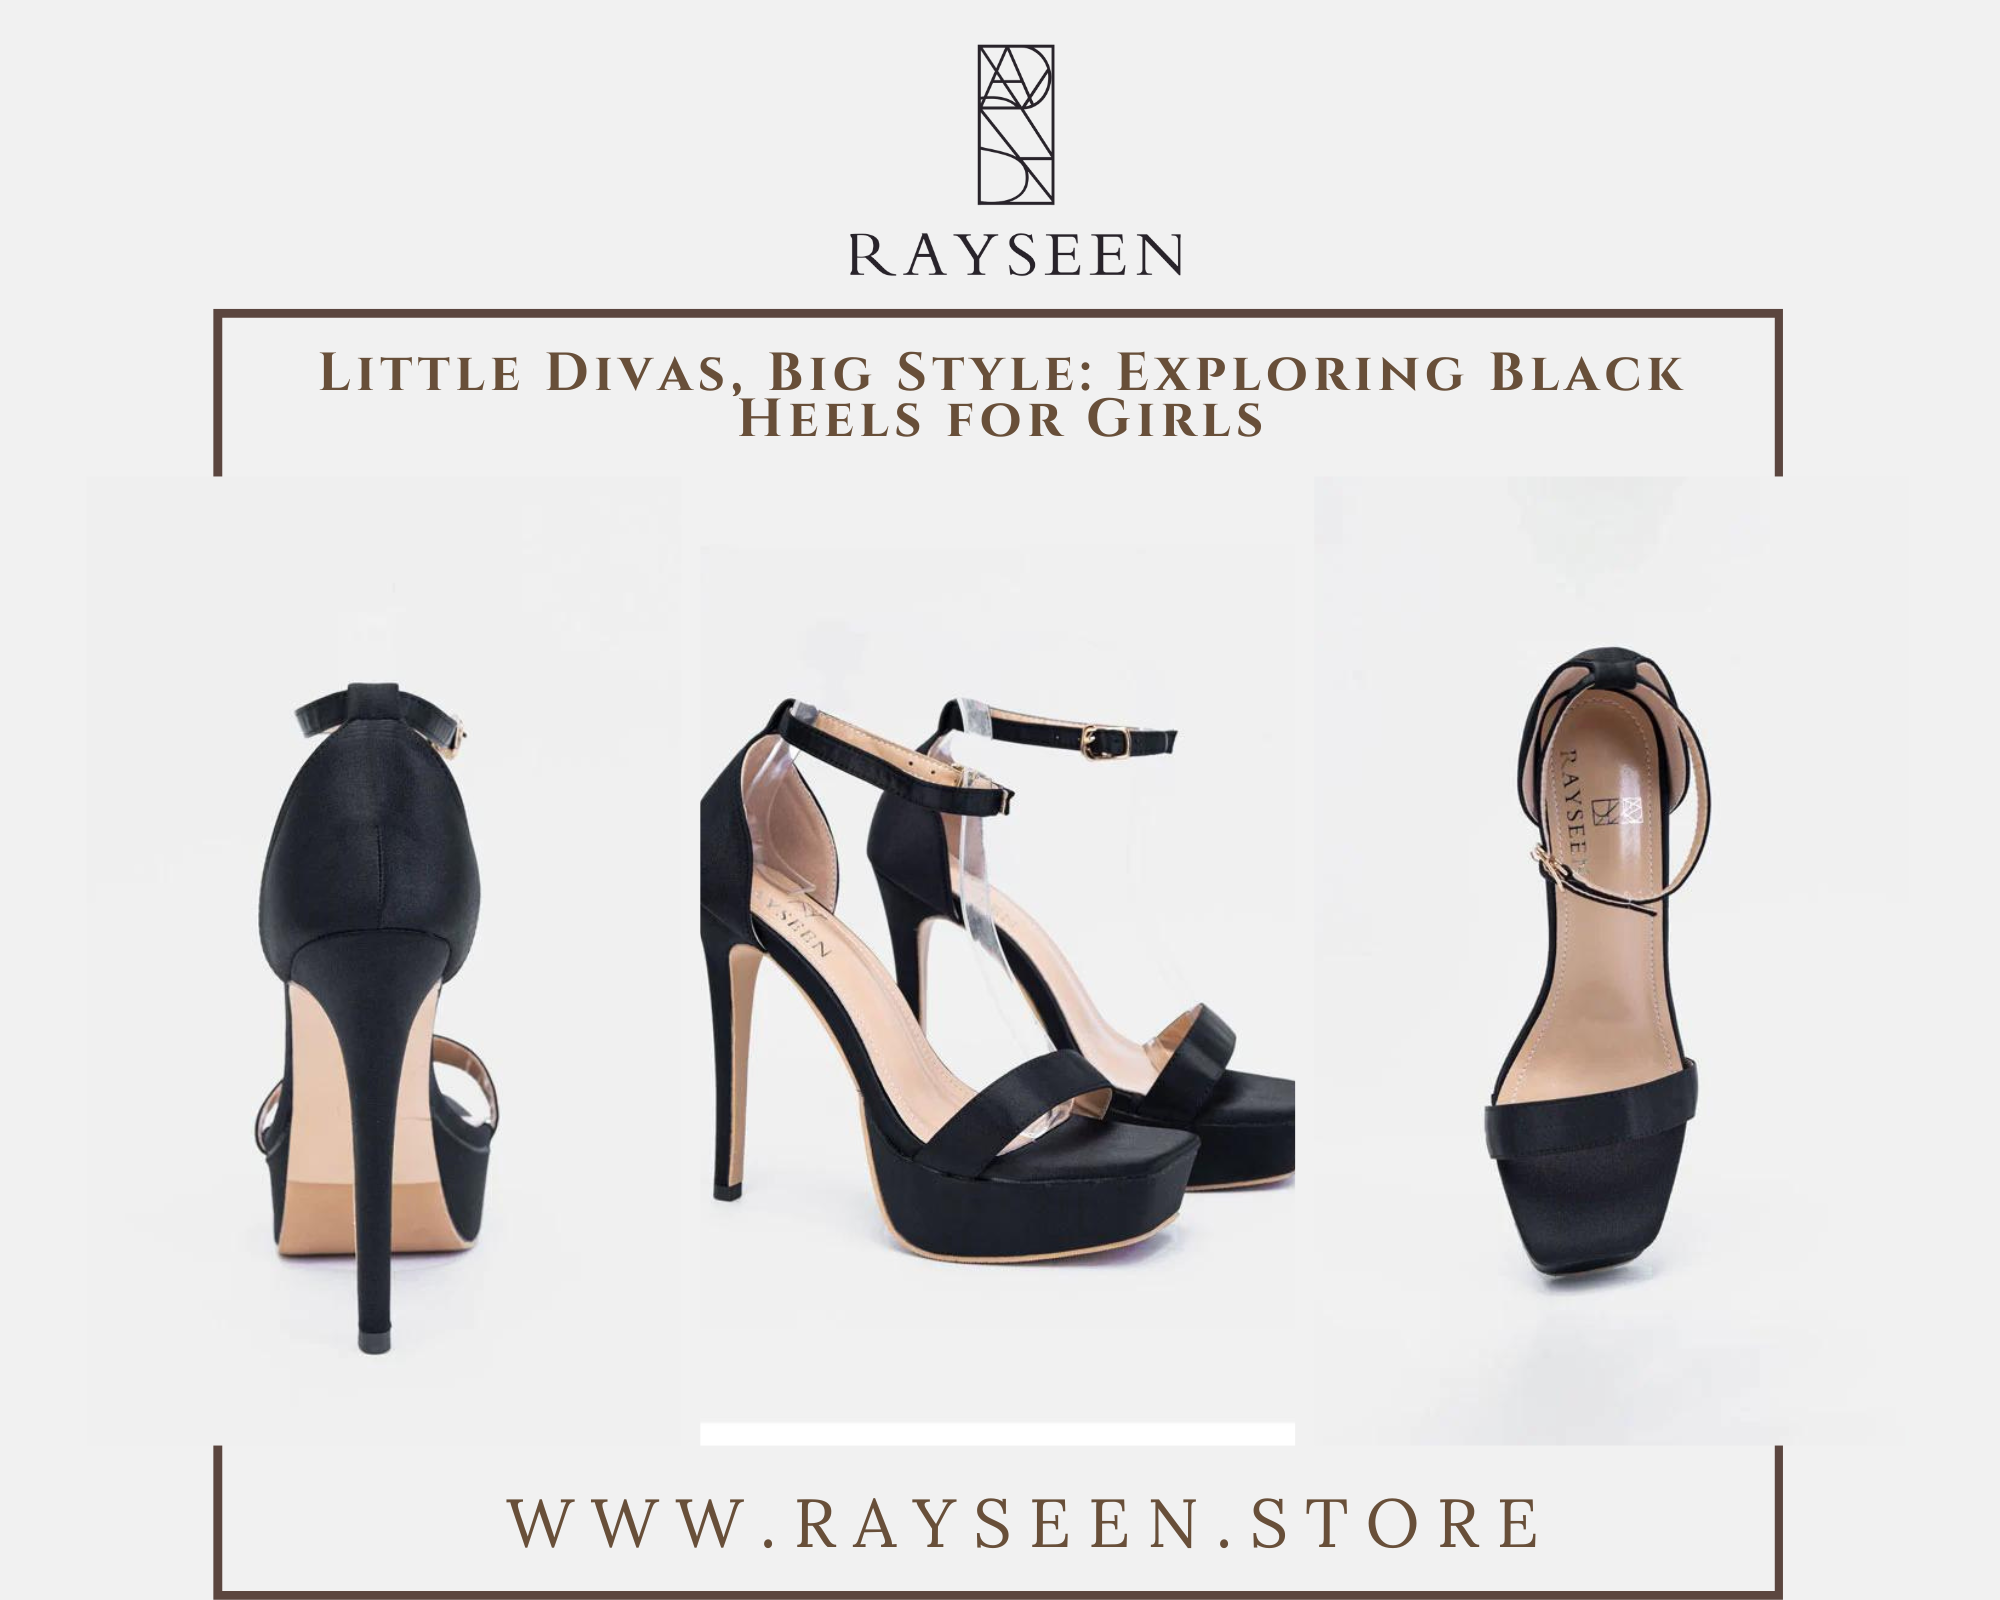 Little Divas, Big Style: Exploring Black Heels for Girls